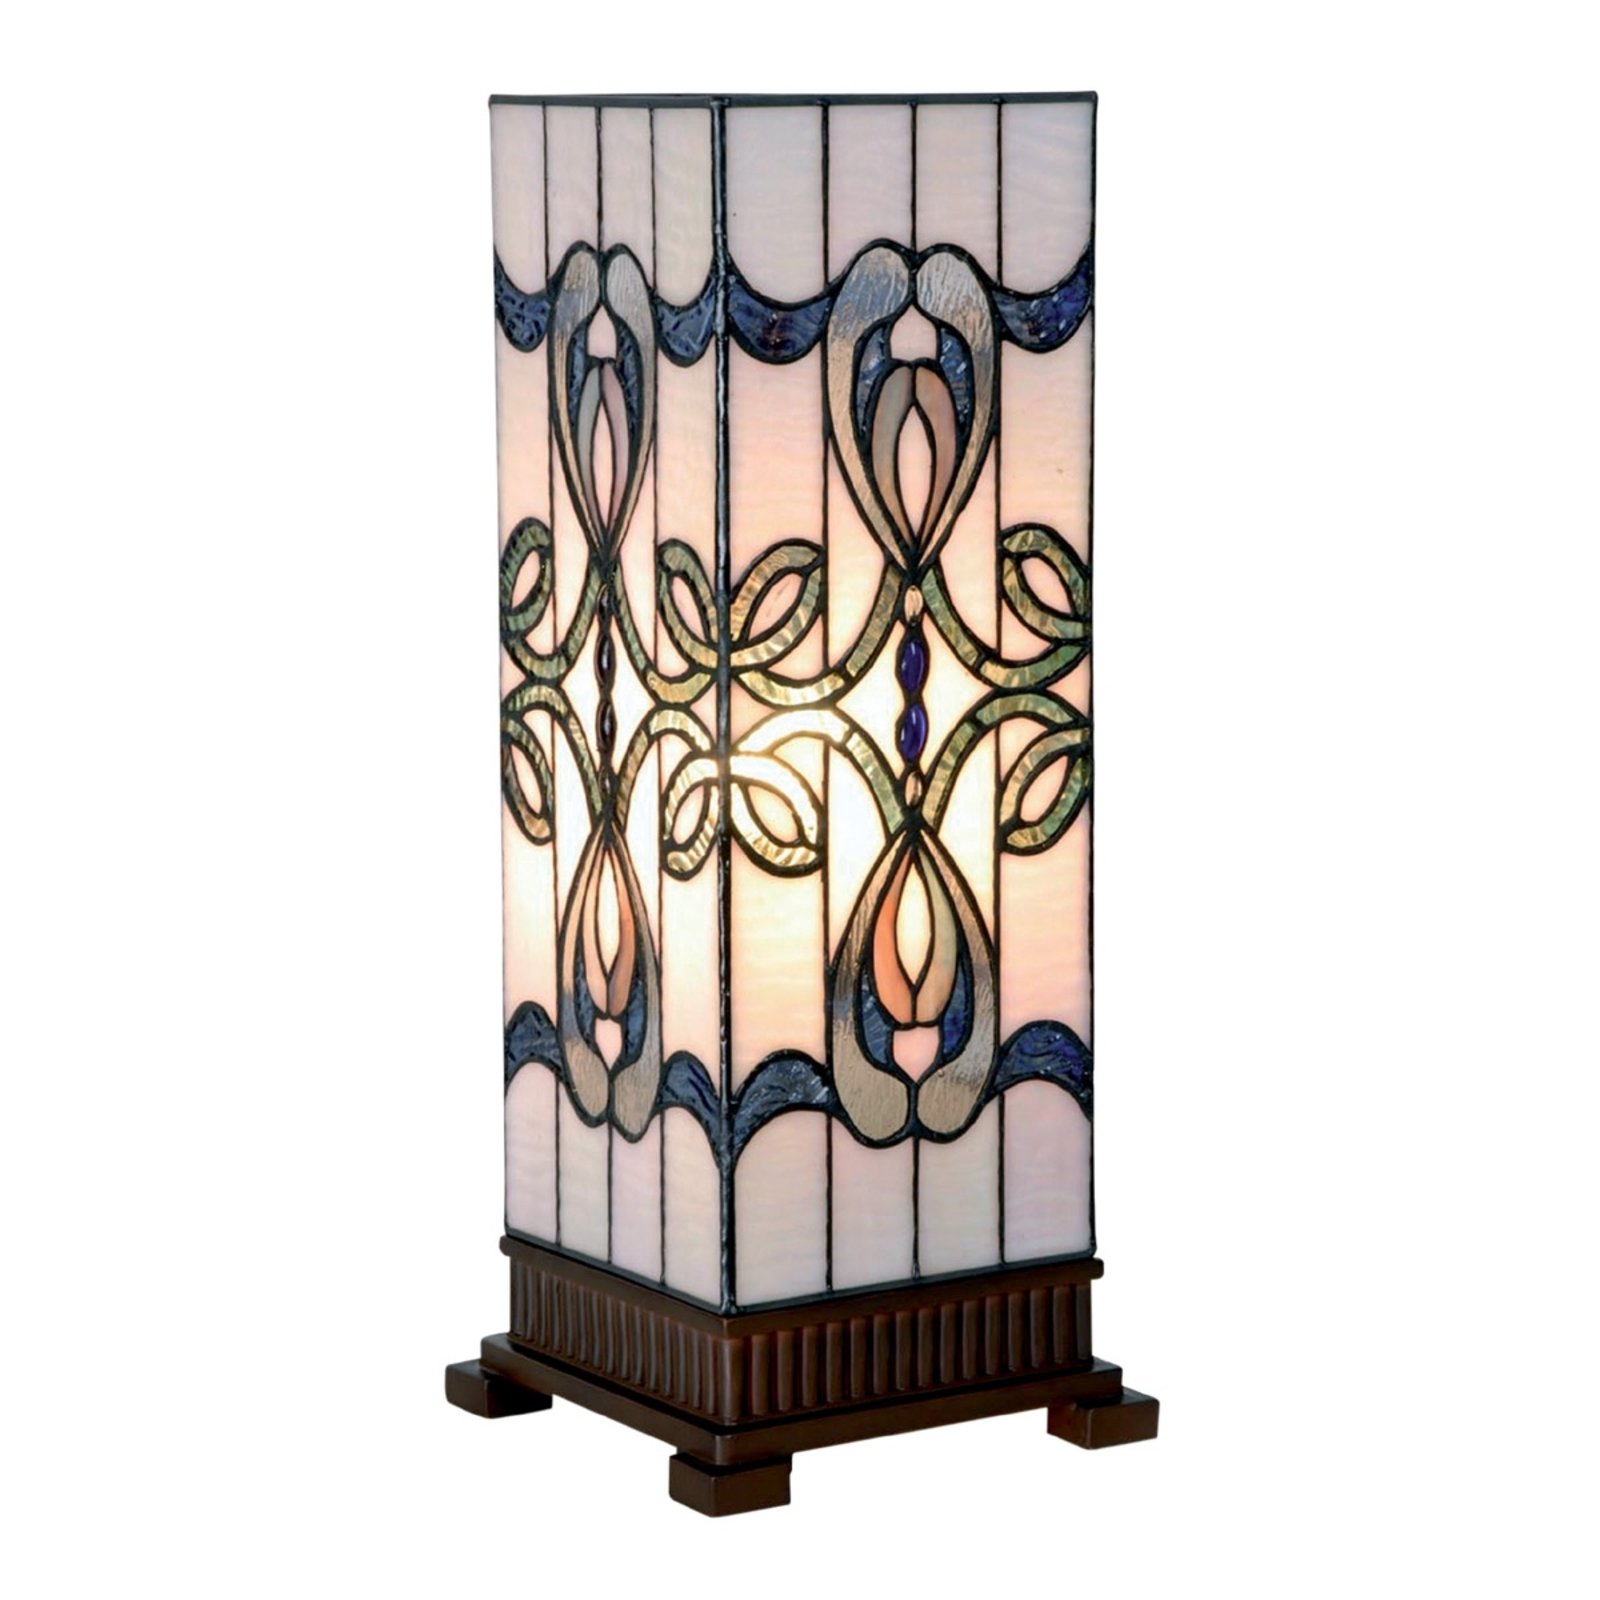 Ornamentalno dizajnirana stolna lampa Brenda